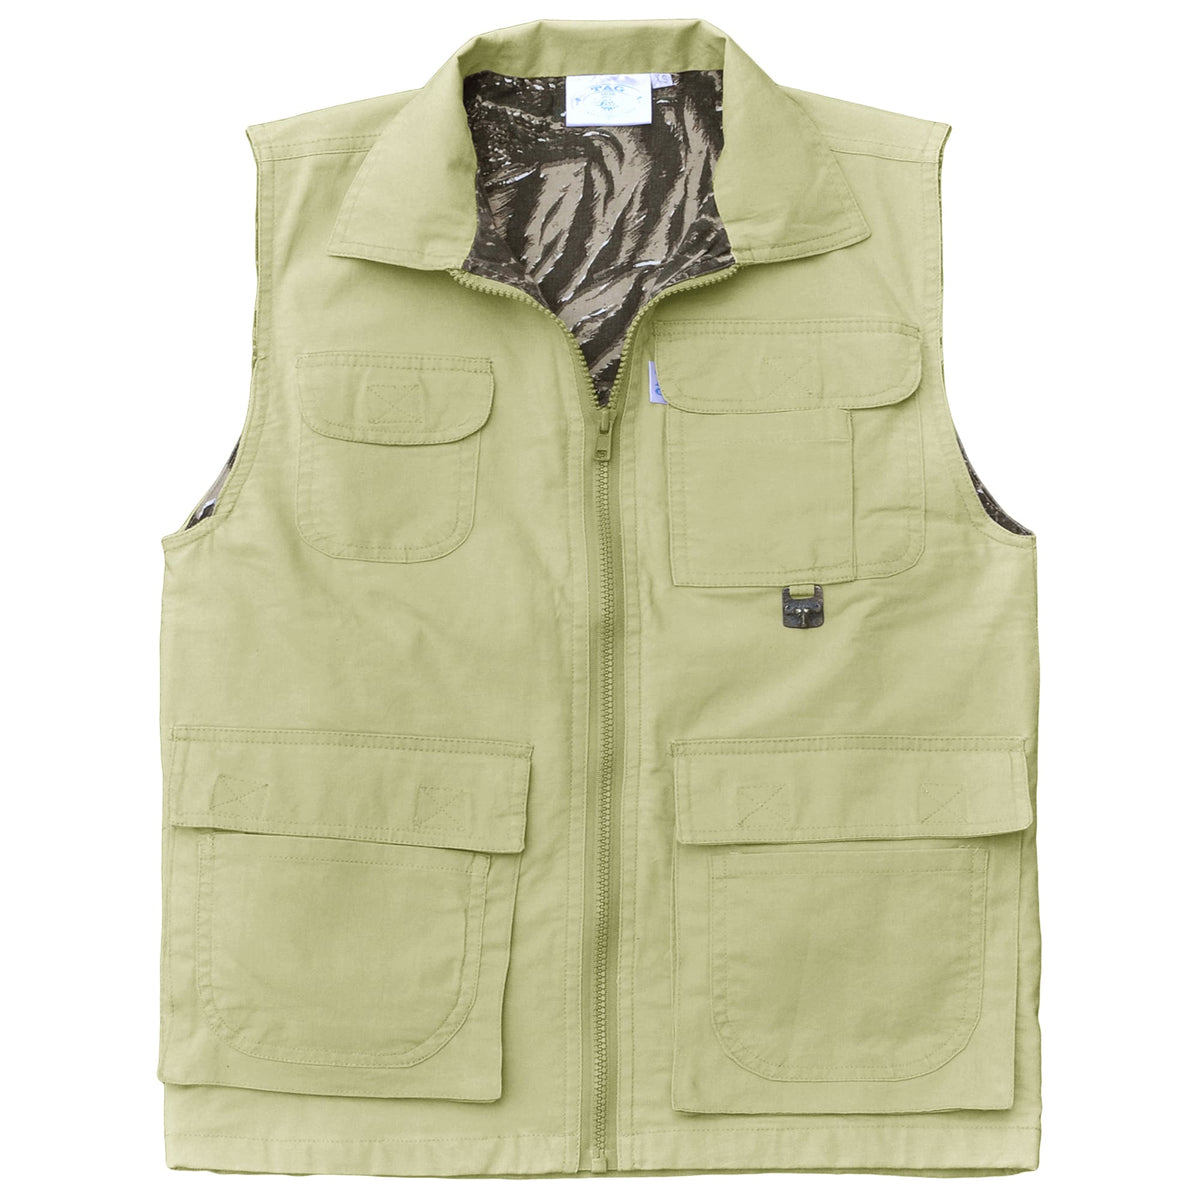 Tag Safari Women's Safari Vest with Covered Oversized Pockets (Stone, Medium)